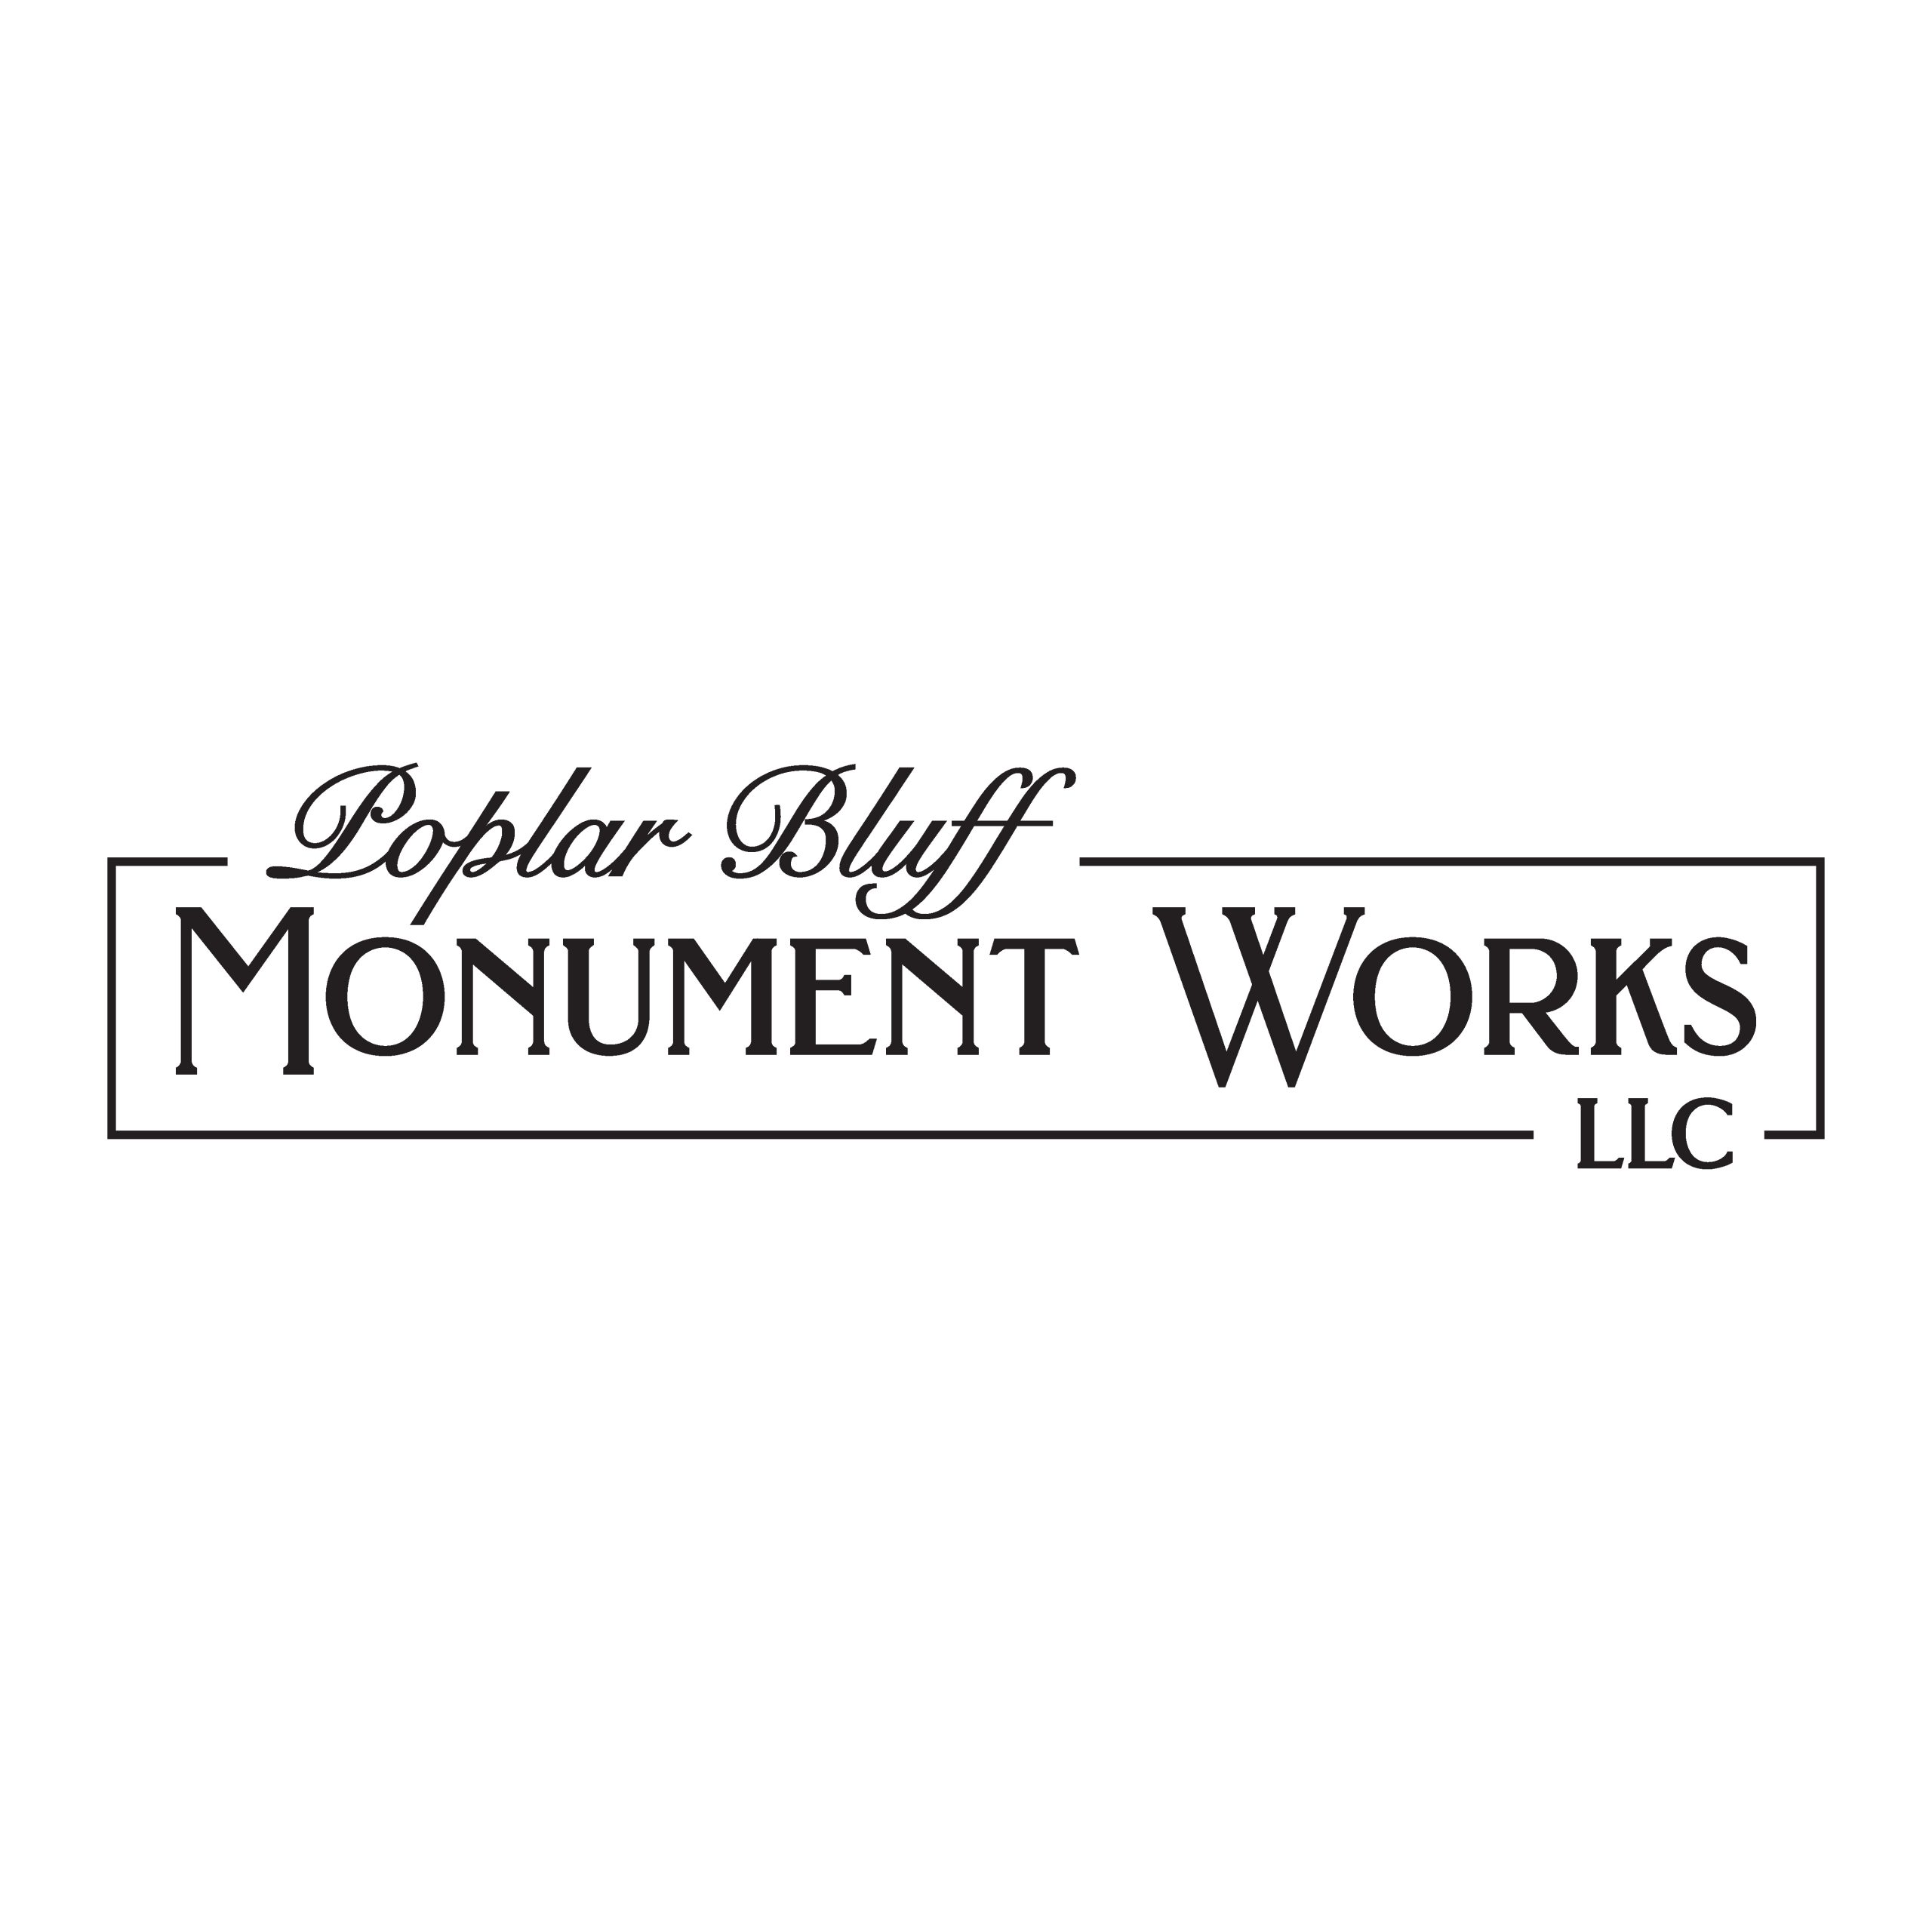 Poplar Bluff Monument Works